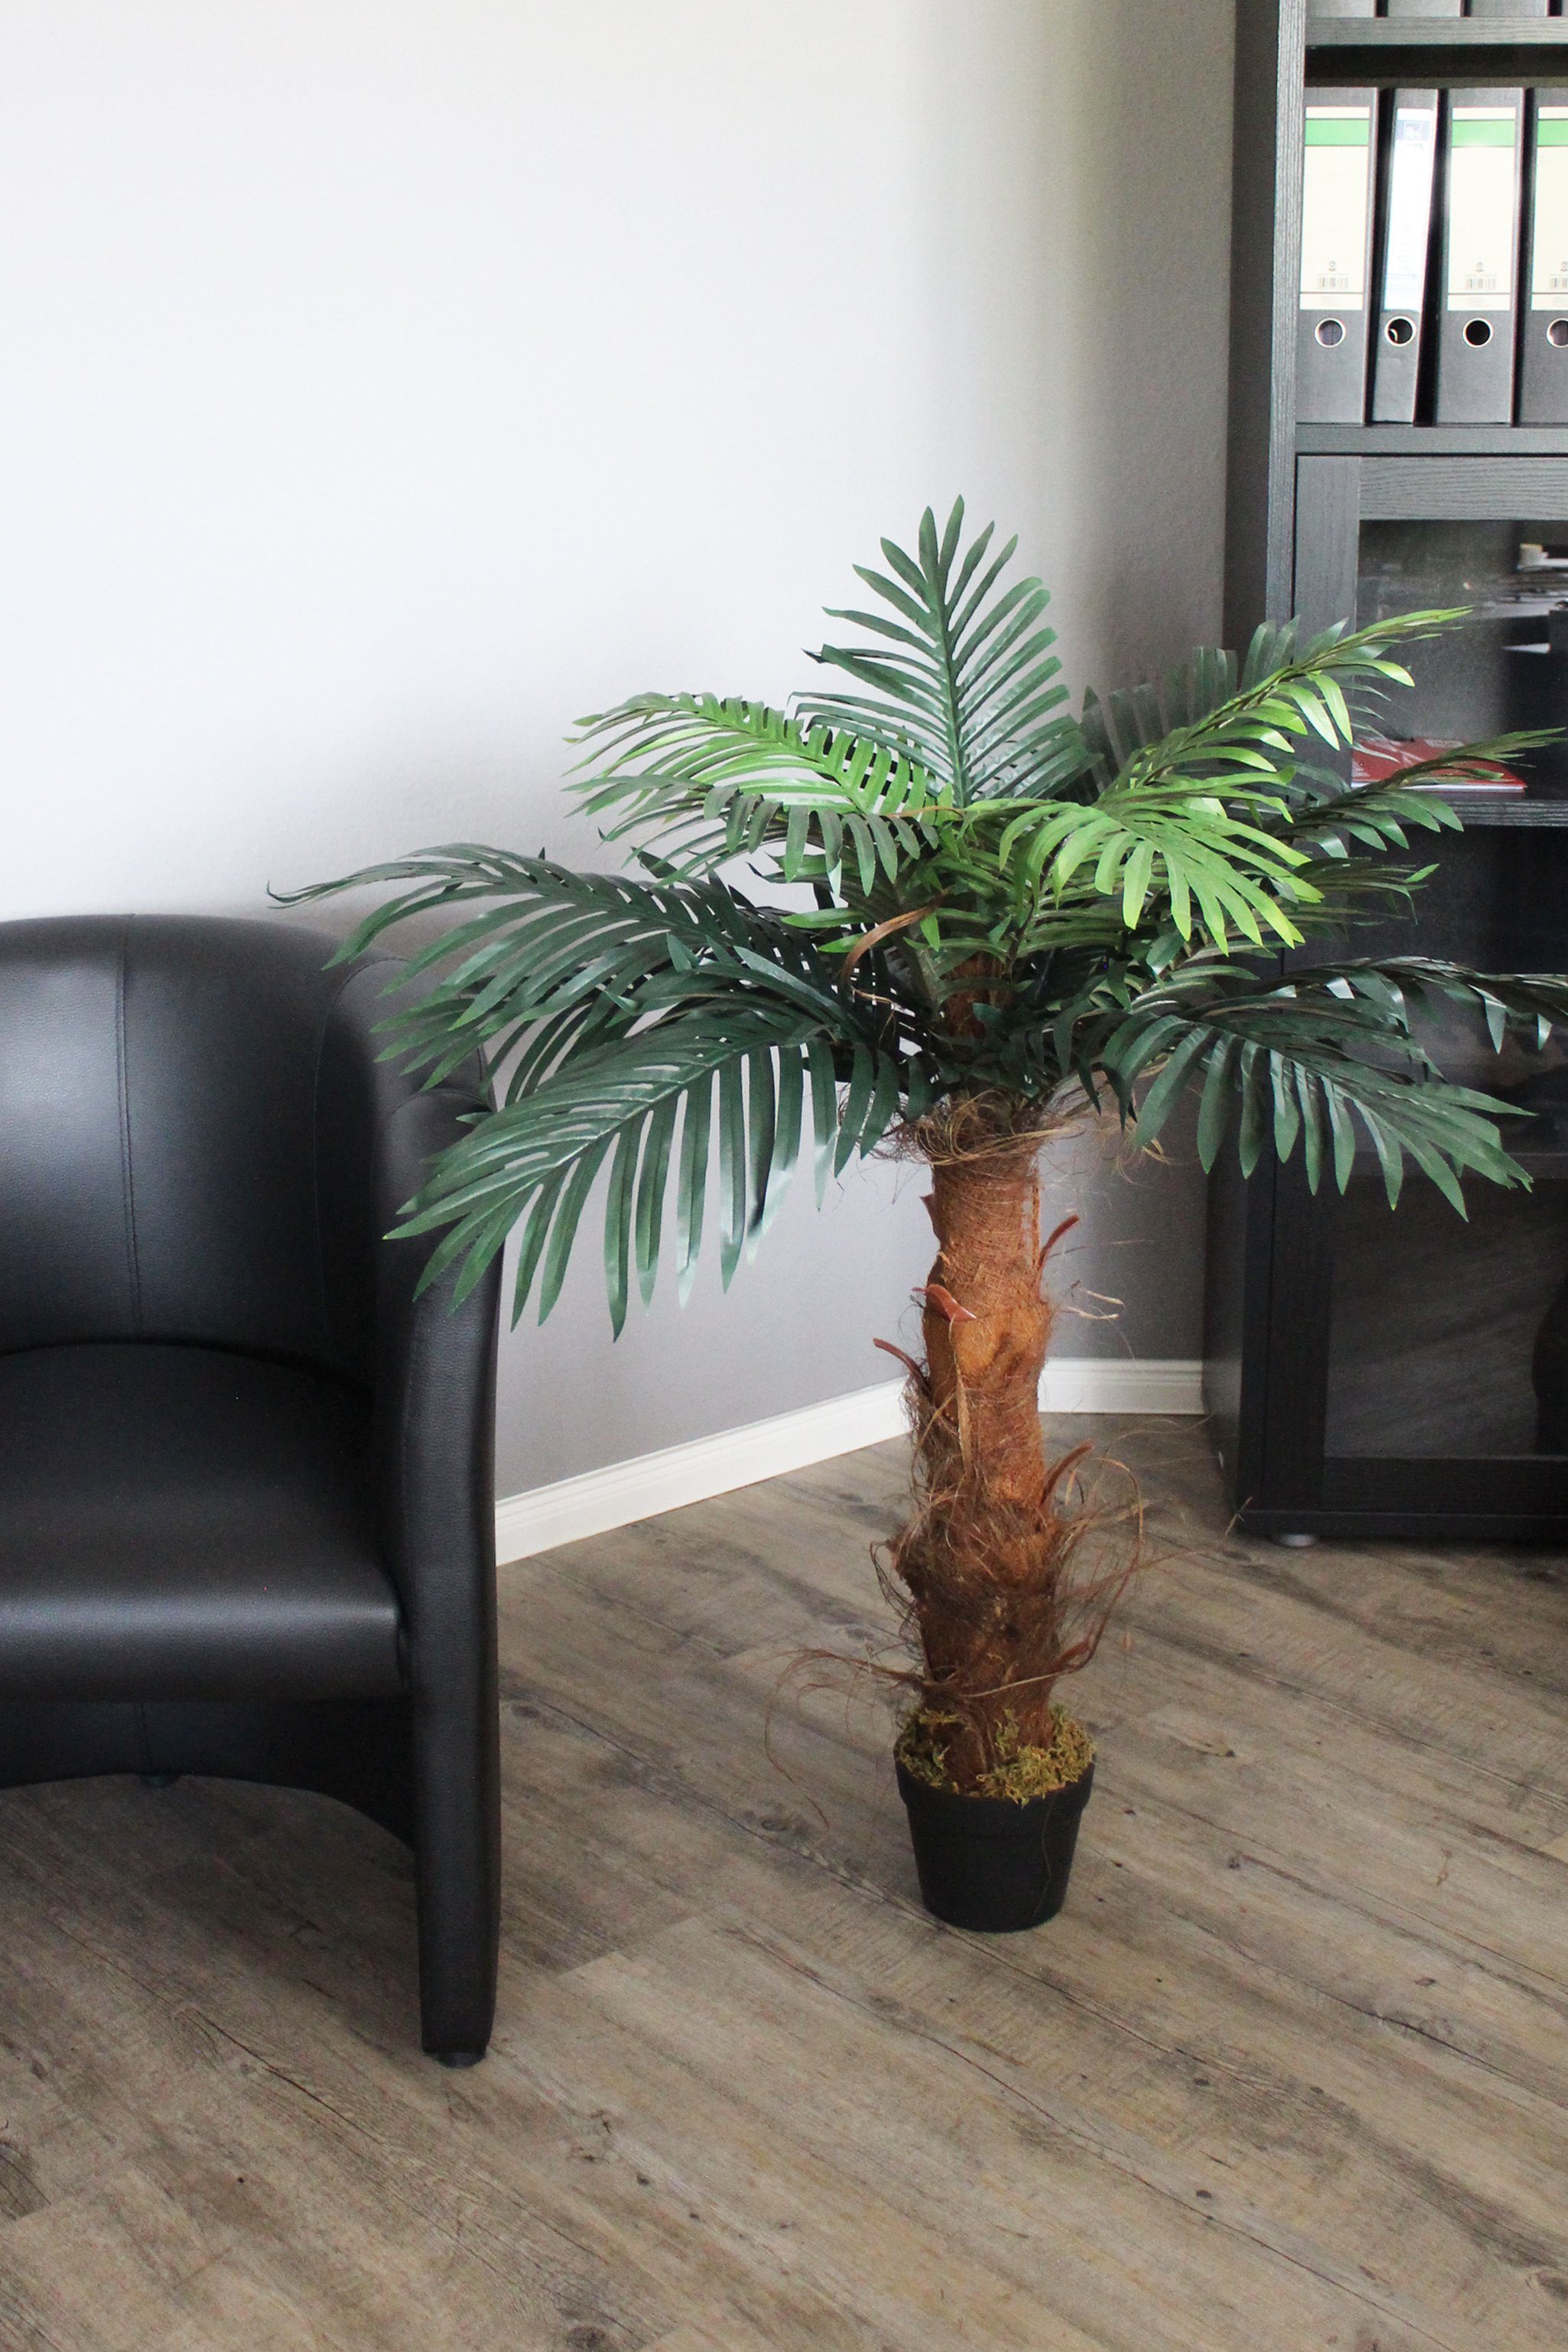 100 Kunstpflanze wie Palme, künstliche cm, Real-Touch Palme Pflanze 100 echt Höhe Arnusa, cm Kunstpalme